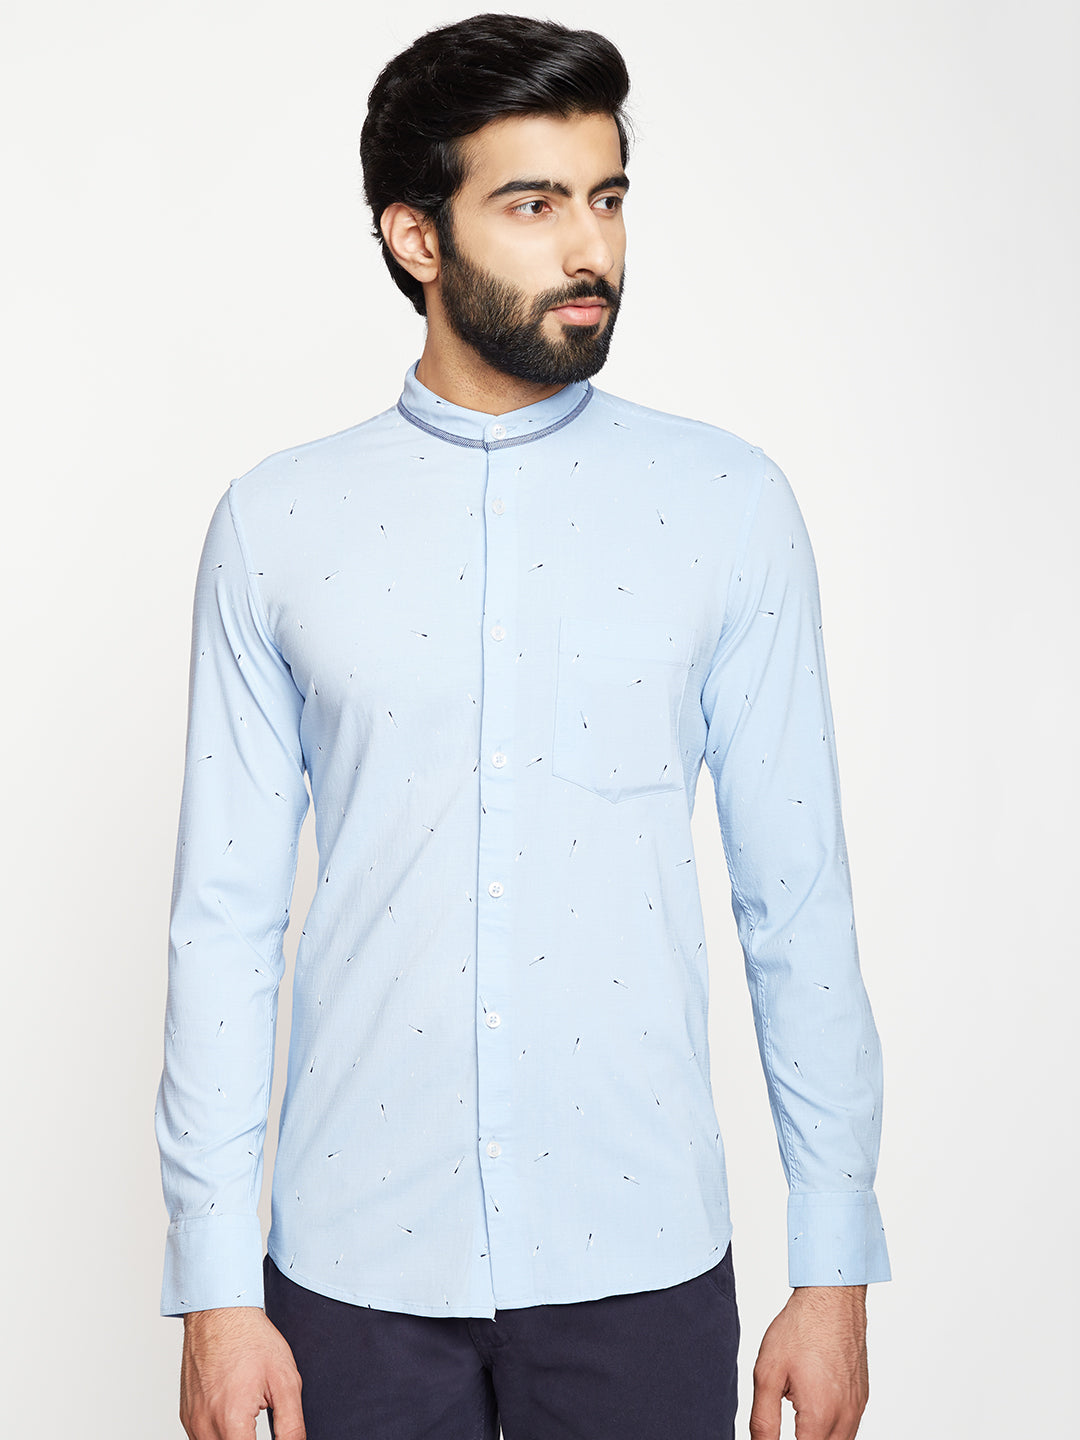 Blue Printed SilmFit shirt - Men Shirts